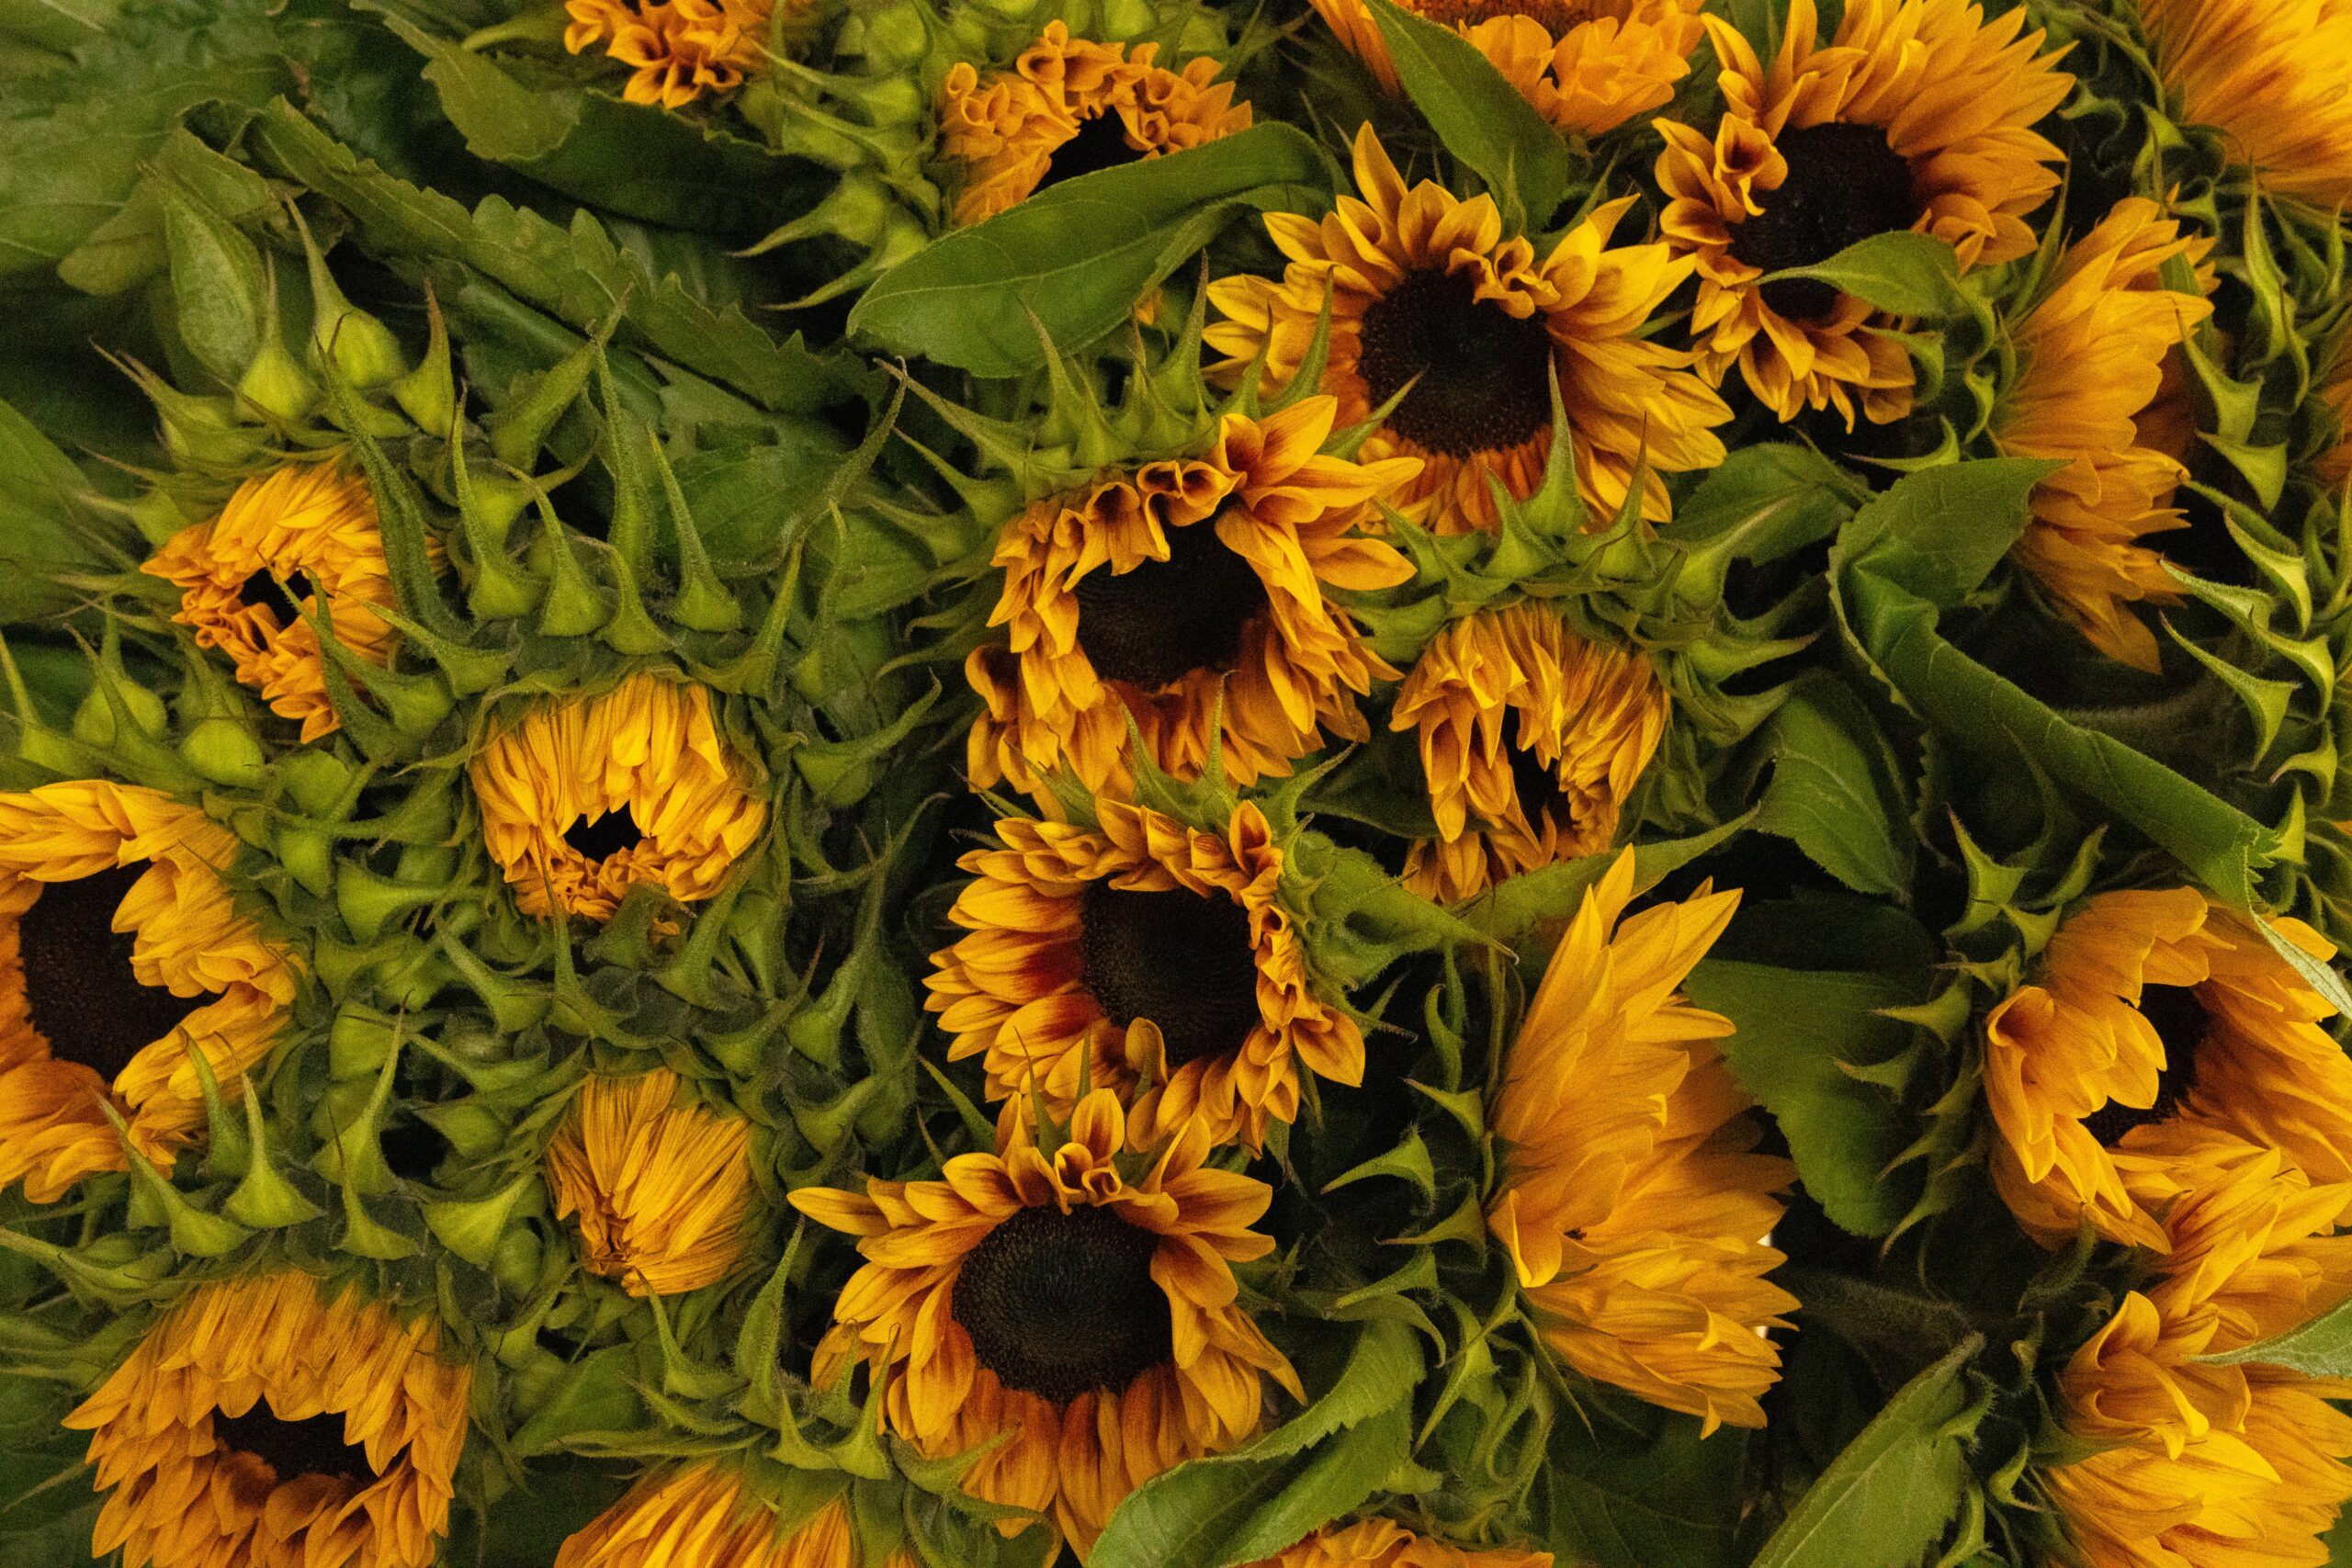 Sunflower nursery's masterpieces